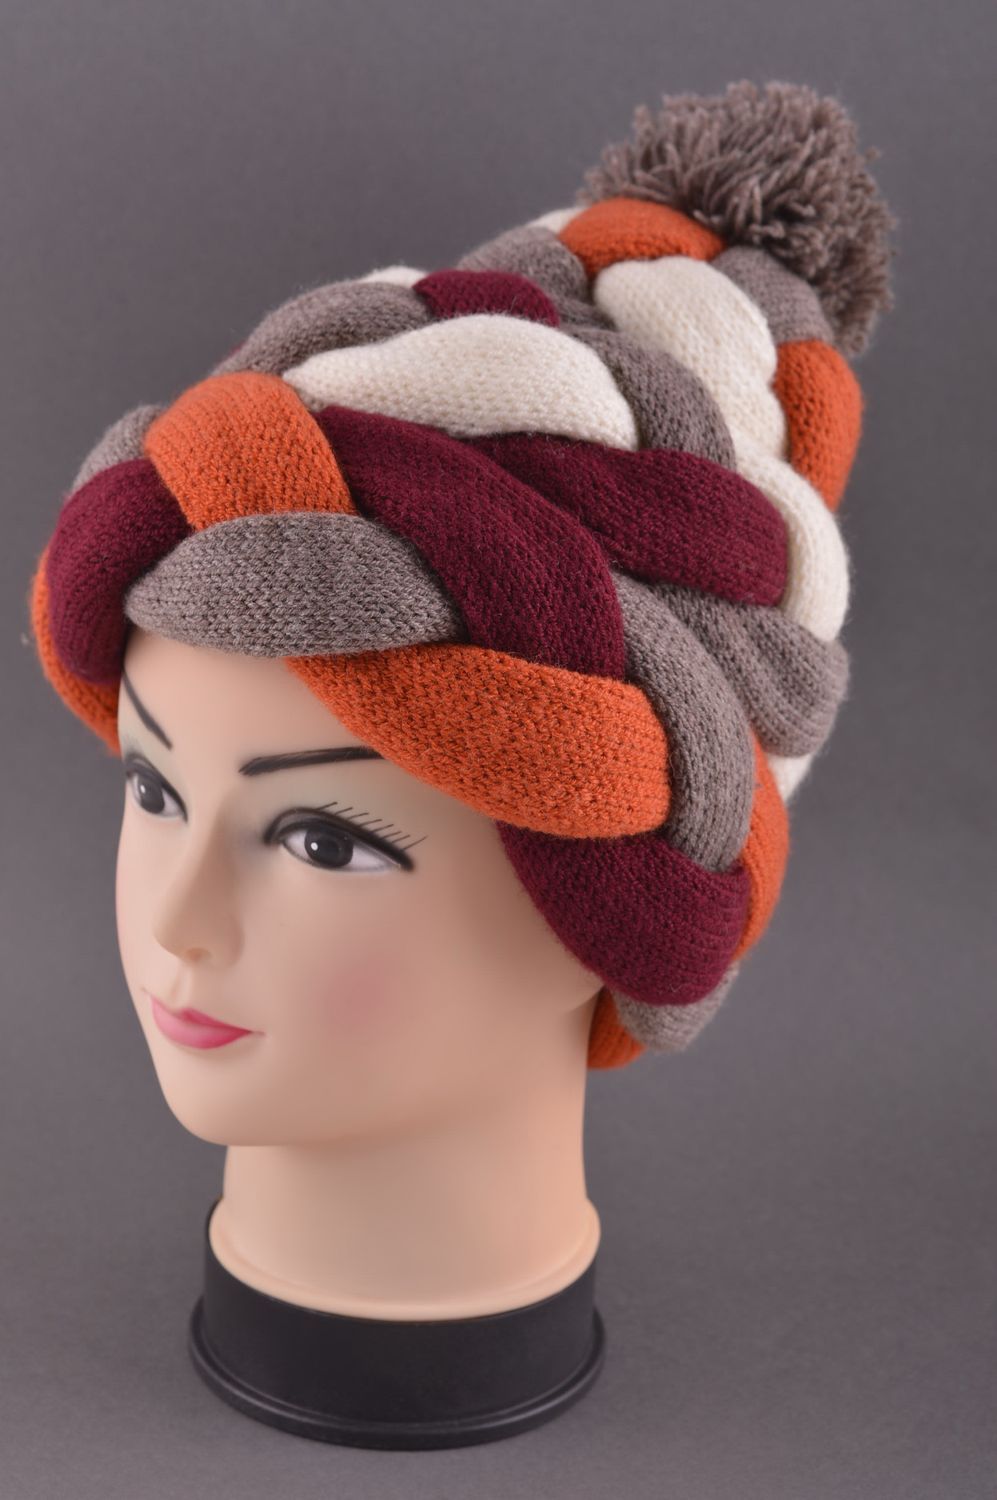 Fashion hat handmade warm hat winter accessories for women knitted warm hat photo 1